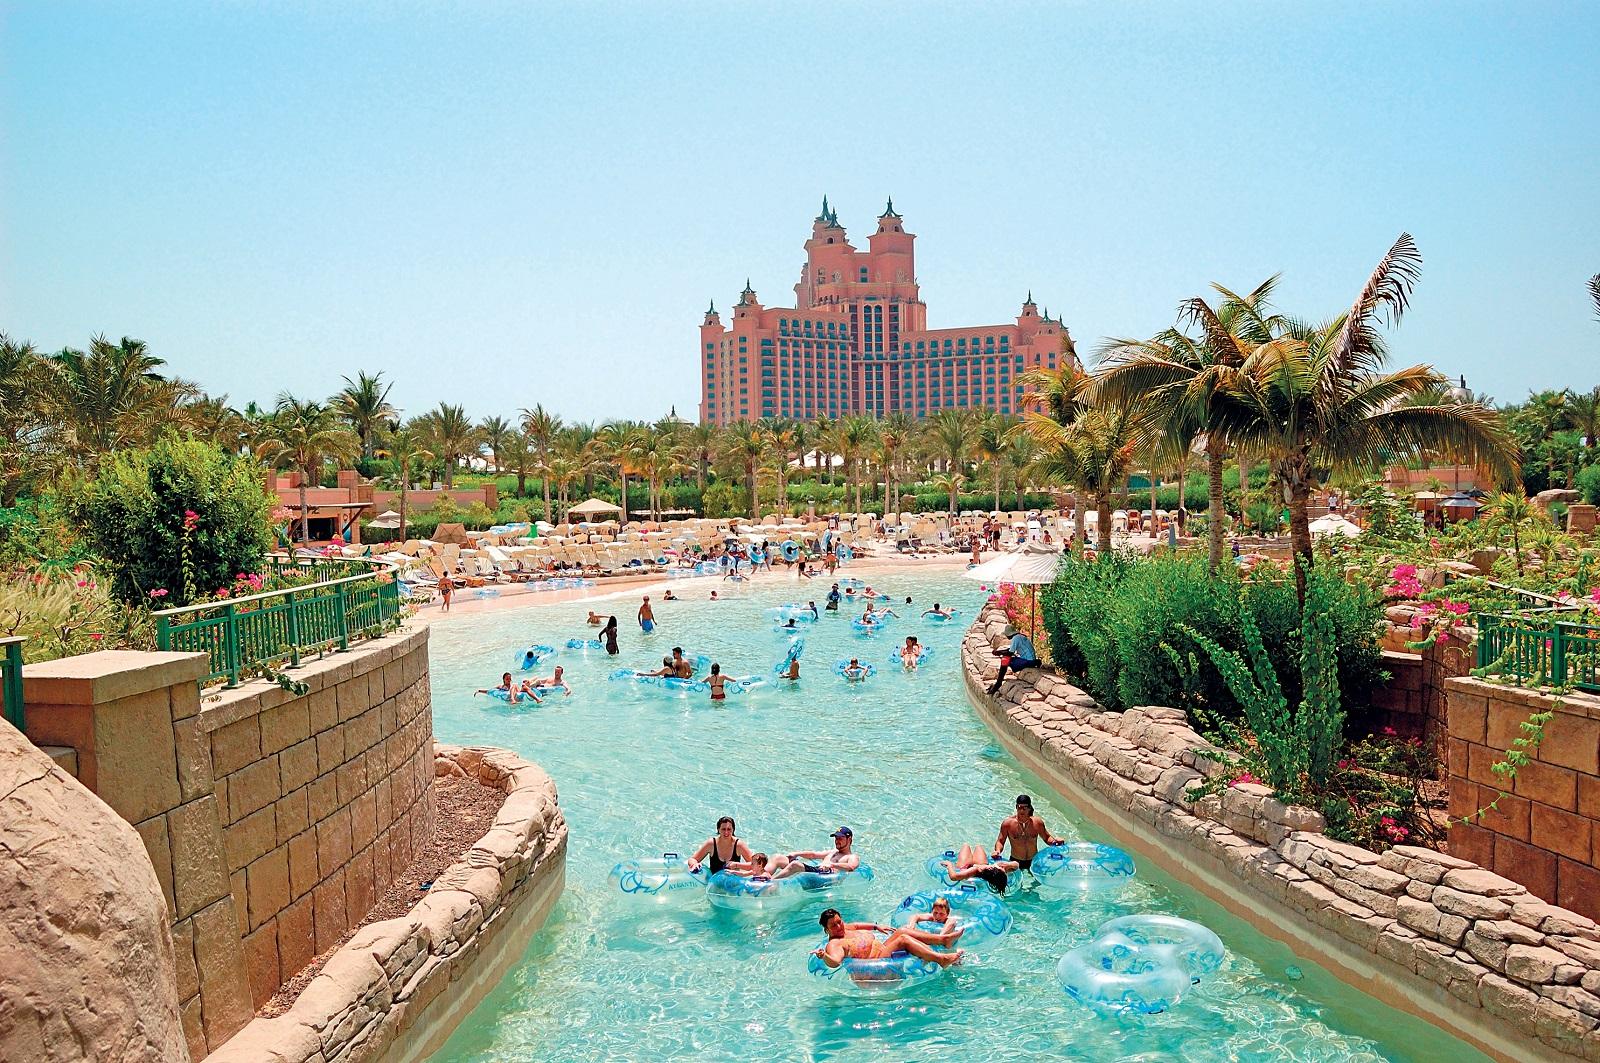 The Atlantis The Palm Swimming Pool